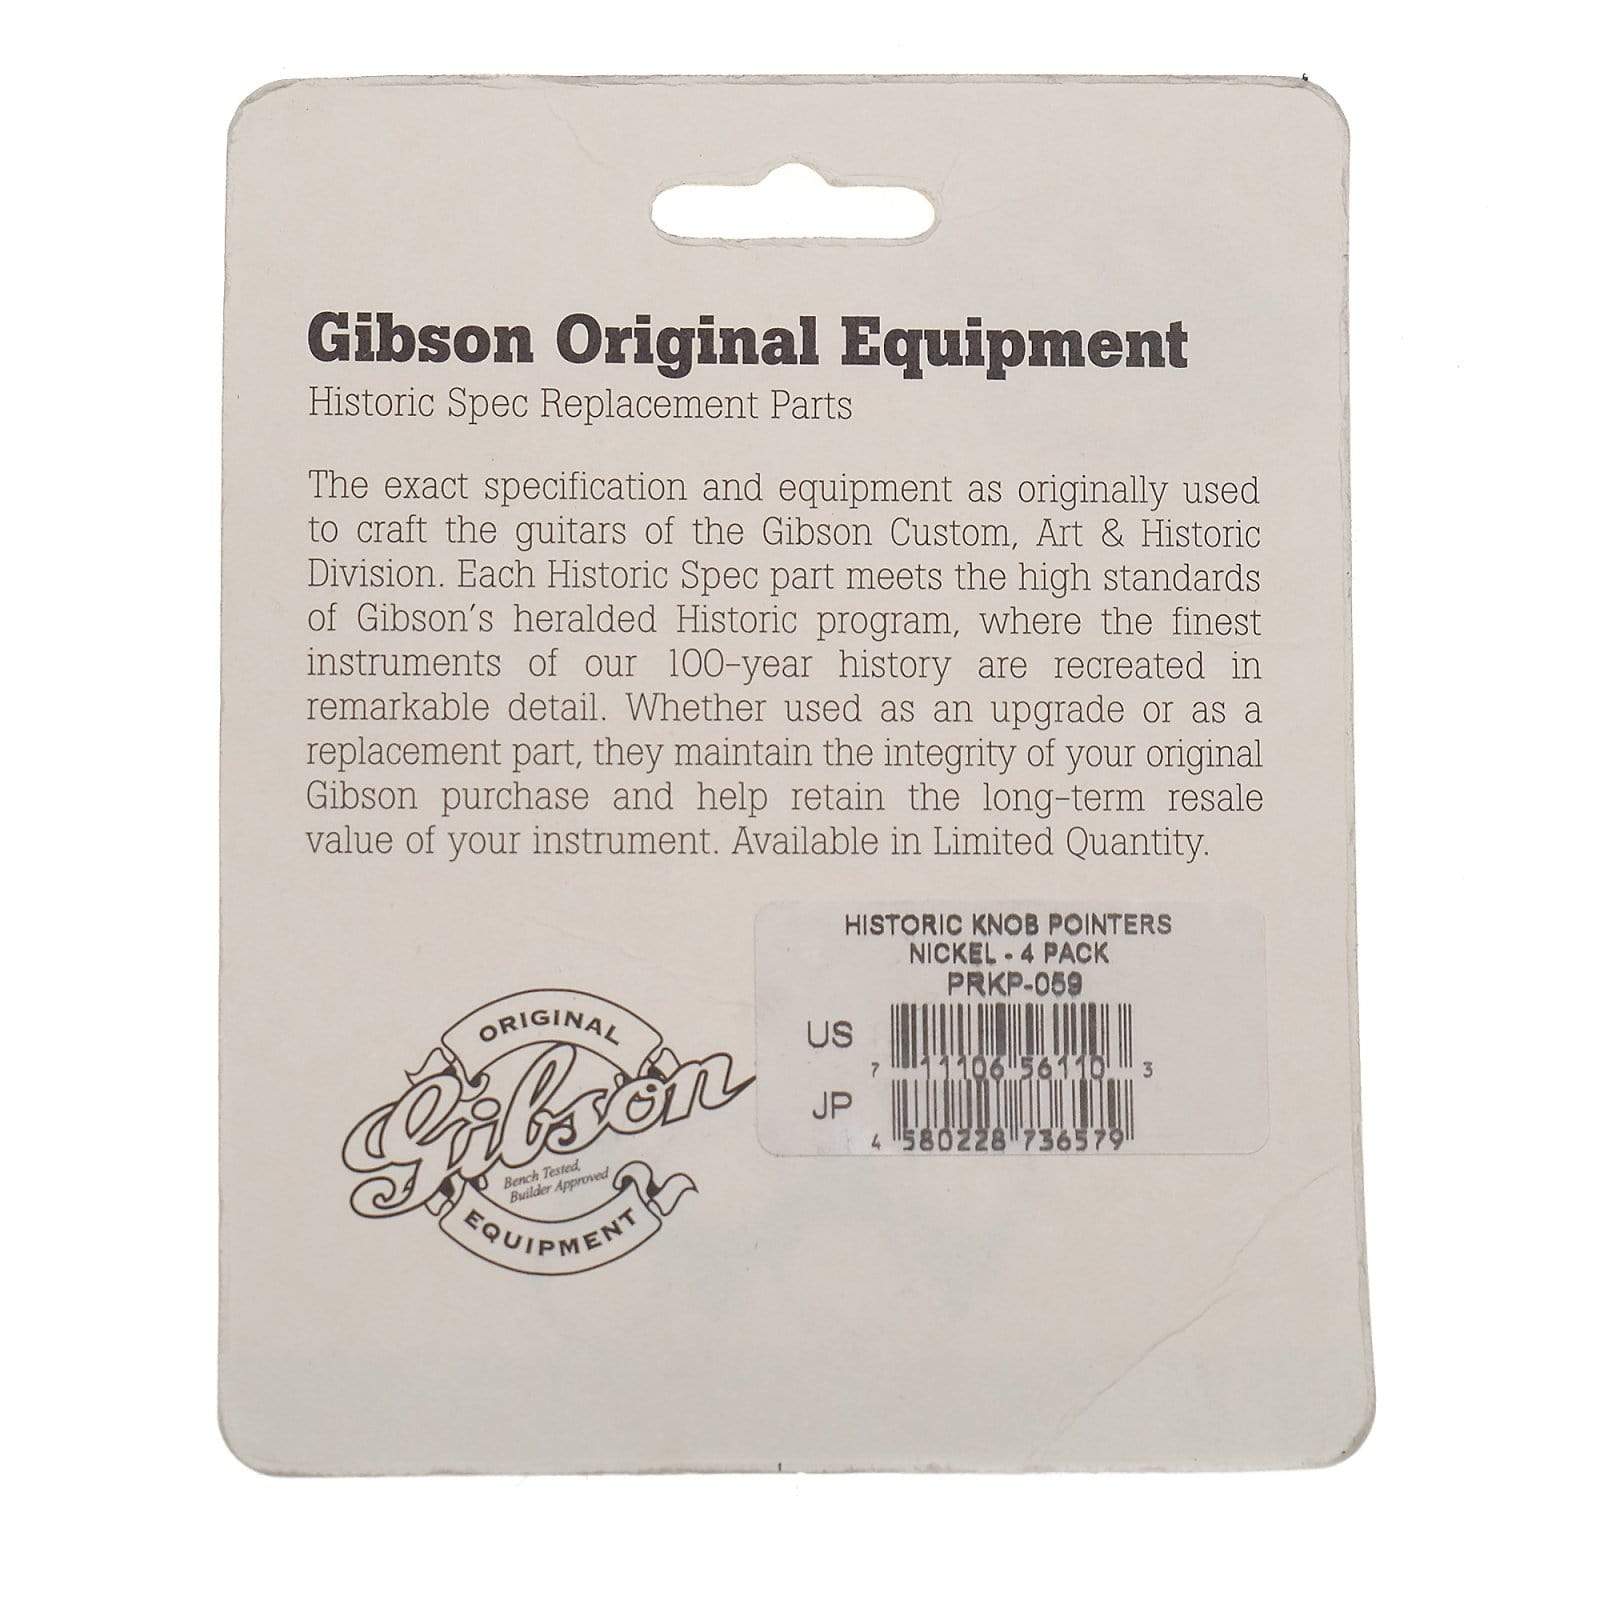 Gibson Historic Knob Pointers - Nickel Parts